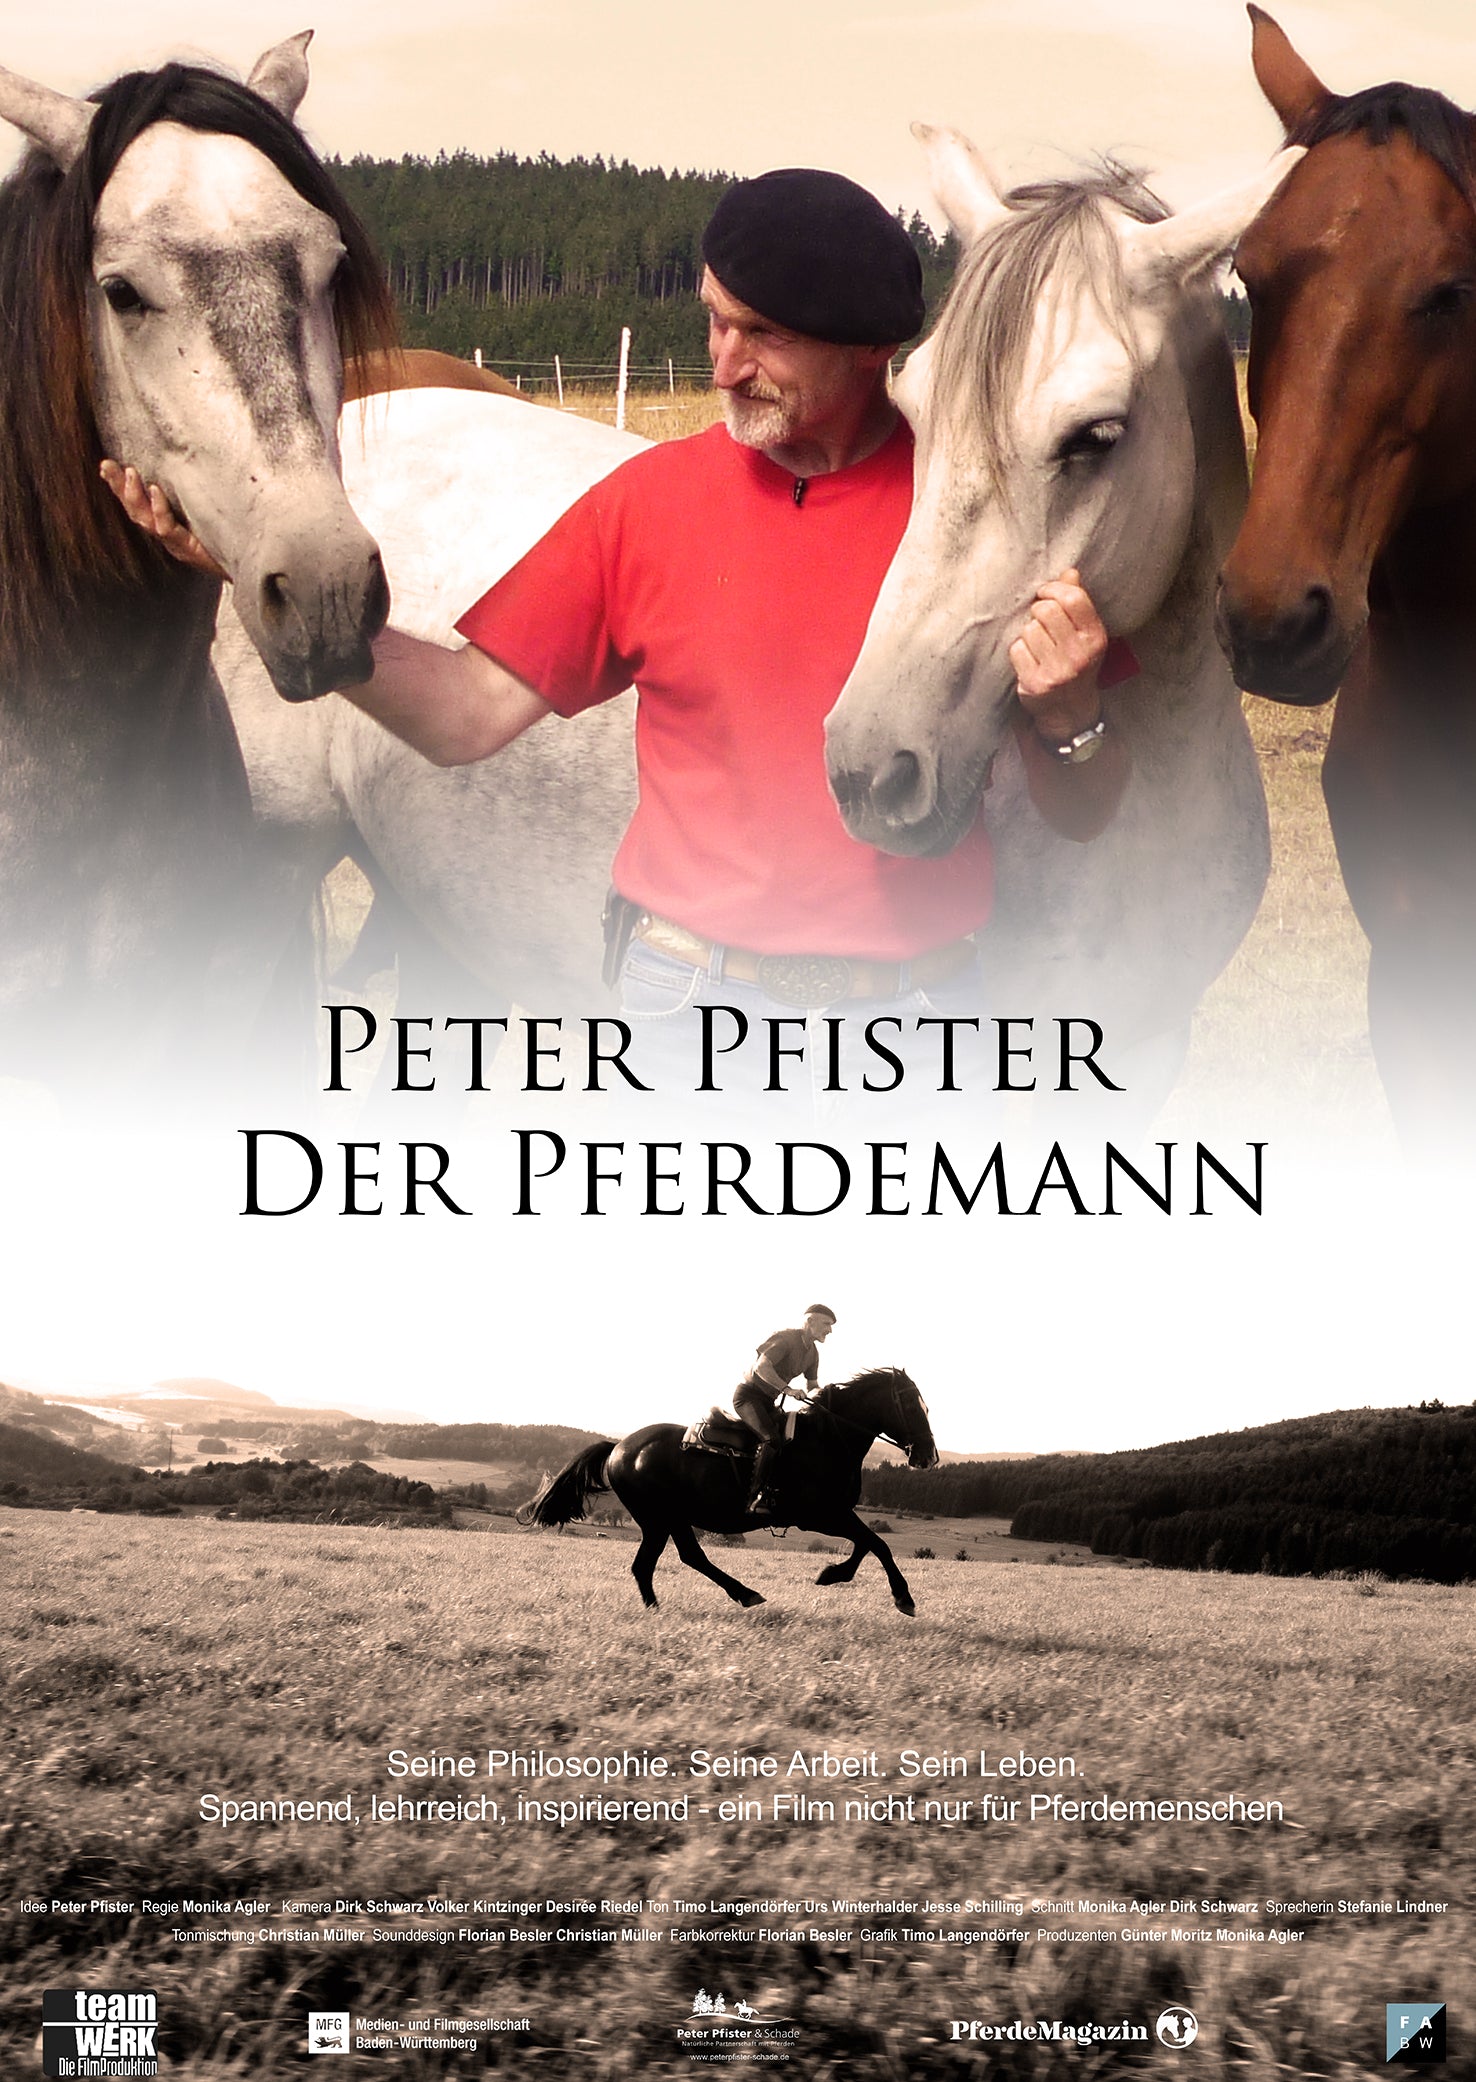 NEW DVD “PETER PFISTER THE HORSEMAN”